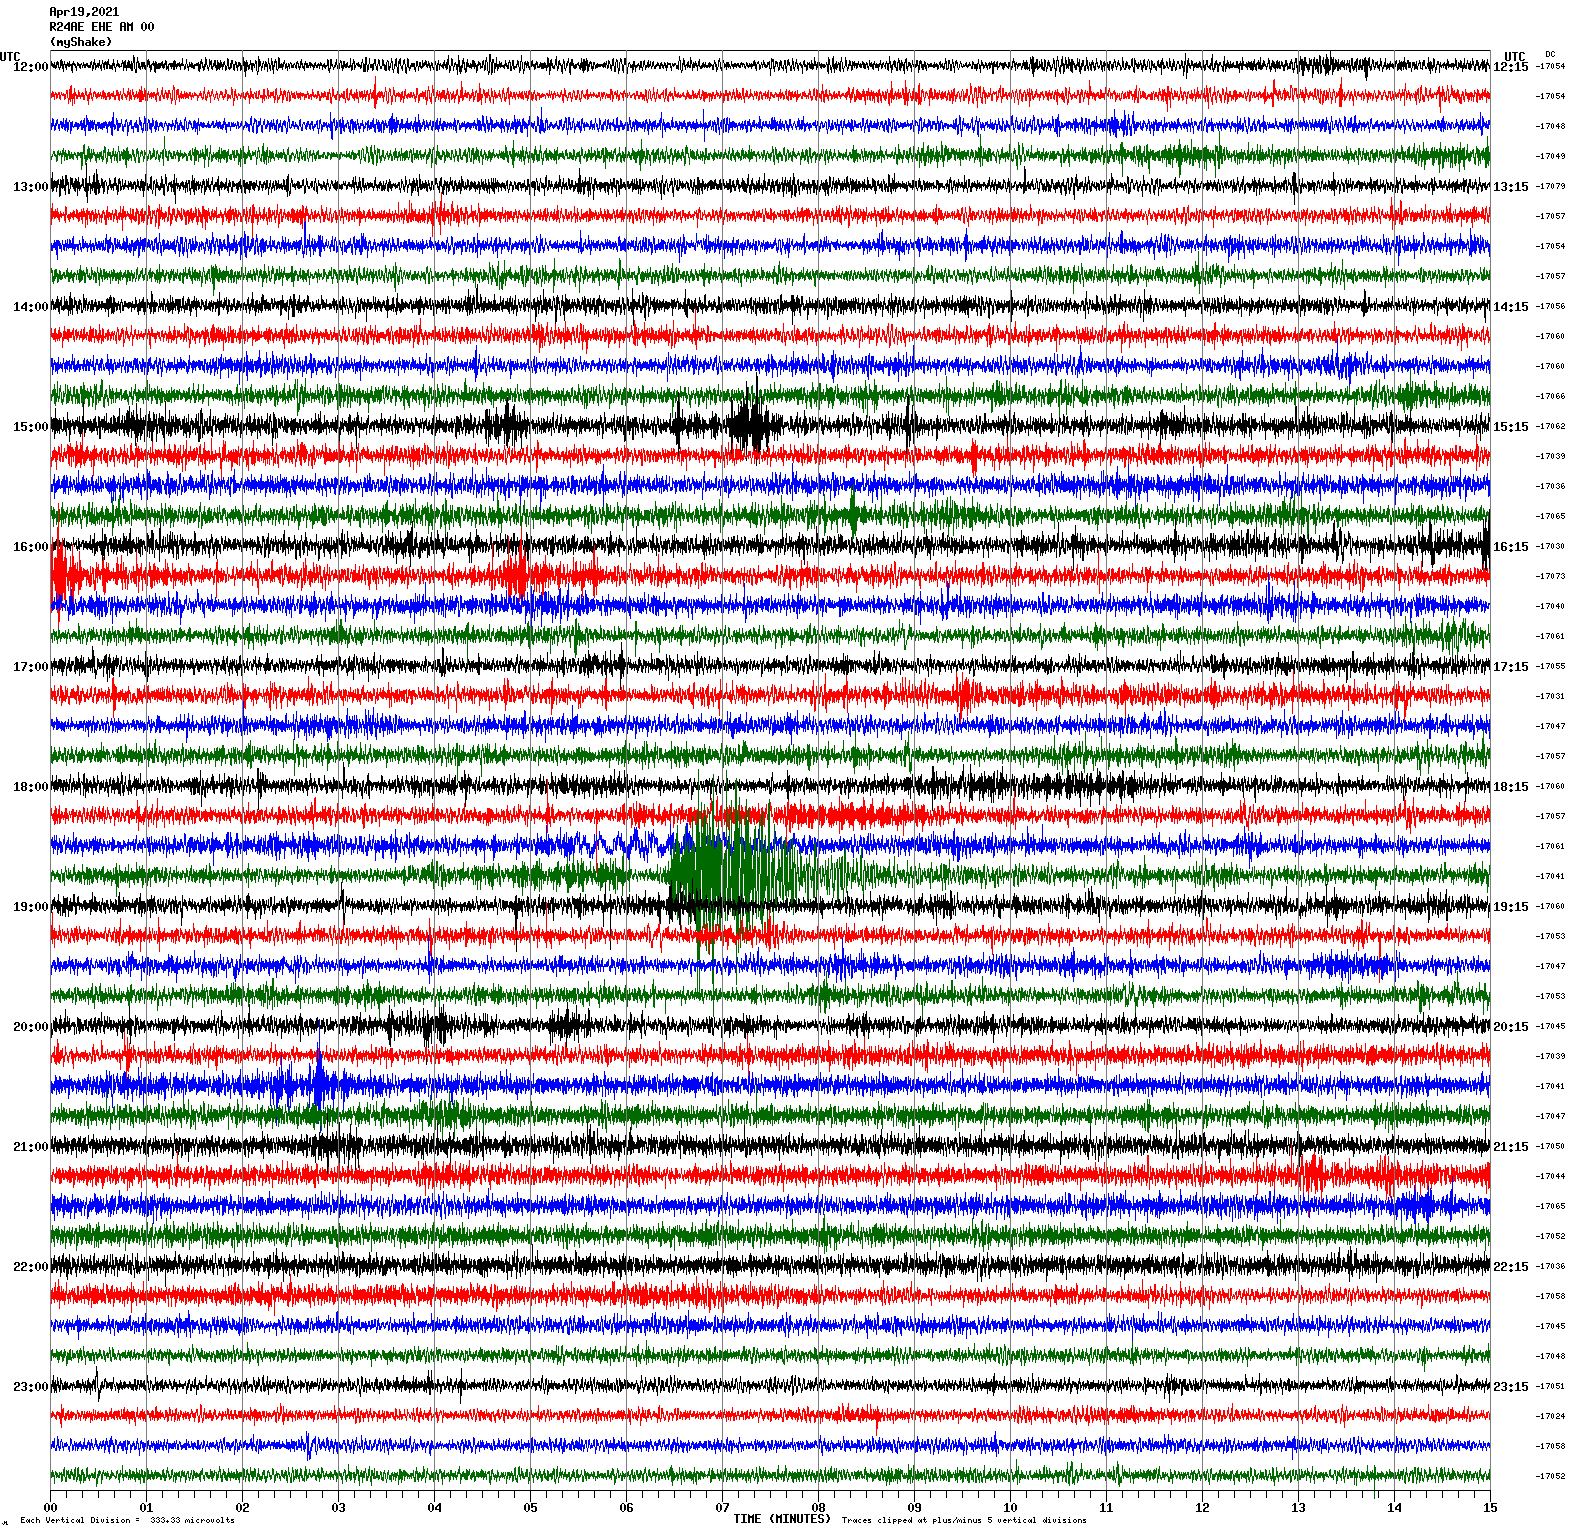 /seismic-data/R24AE/R24AE_EHE_AM_00.2021041912.gif